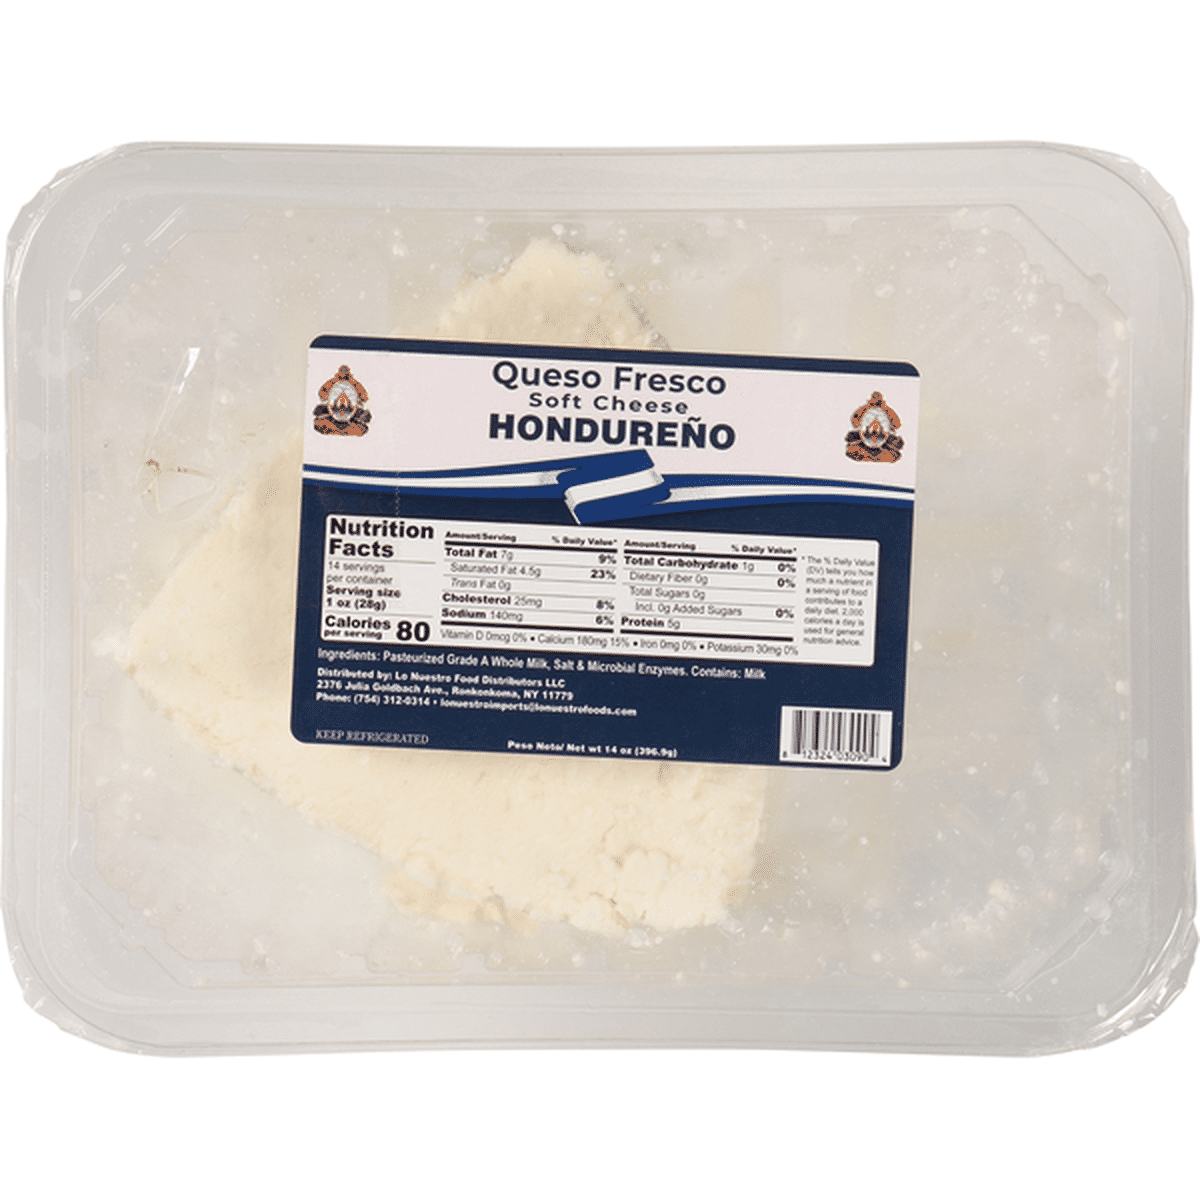 Queso Fresco Soft Cheese Hondureno 14 Oz Delivery Or Pickup Near Me 5137